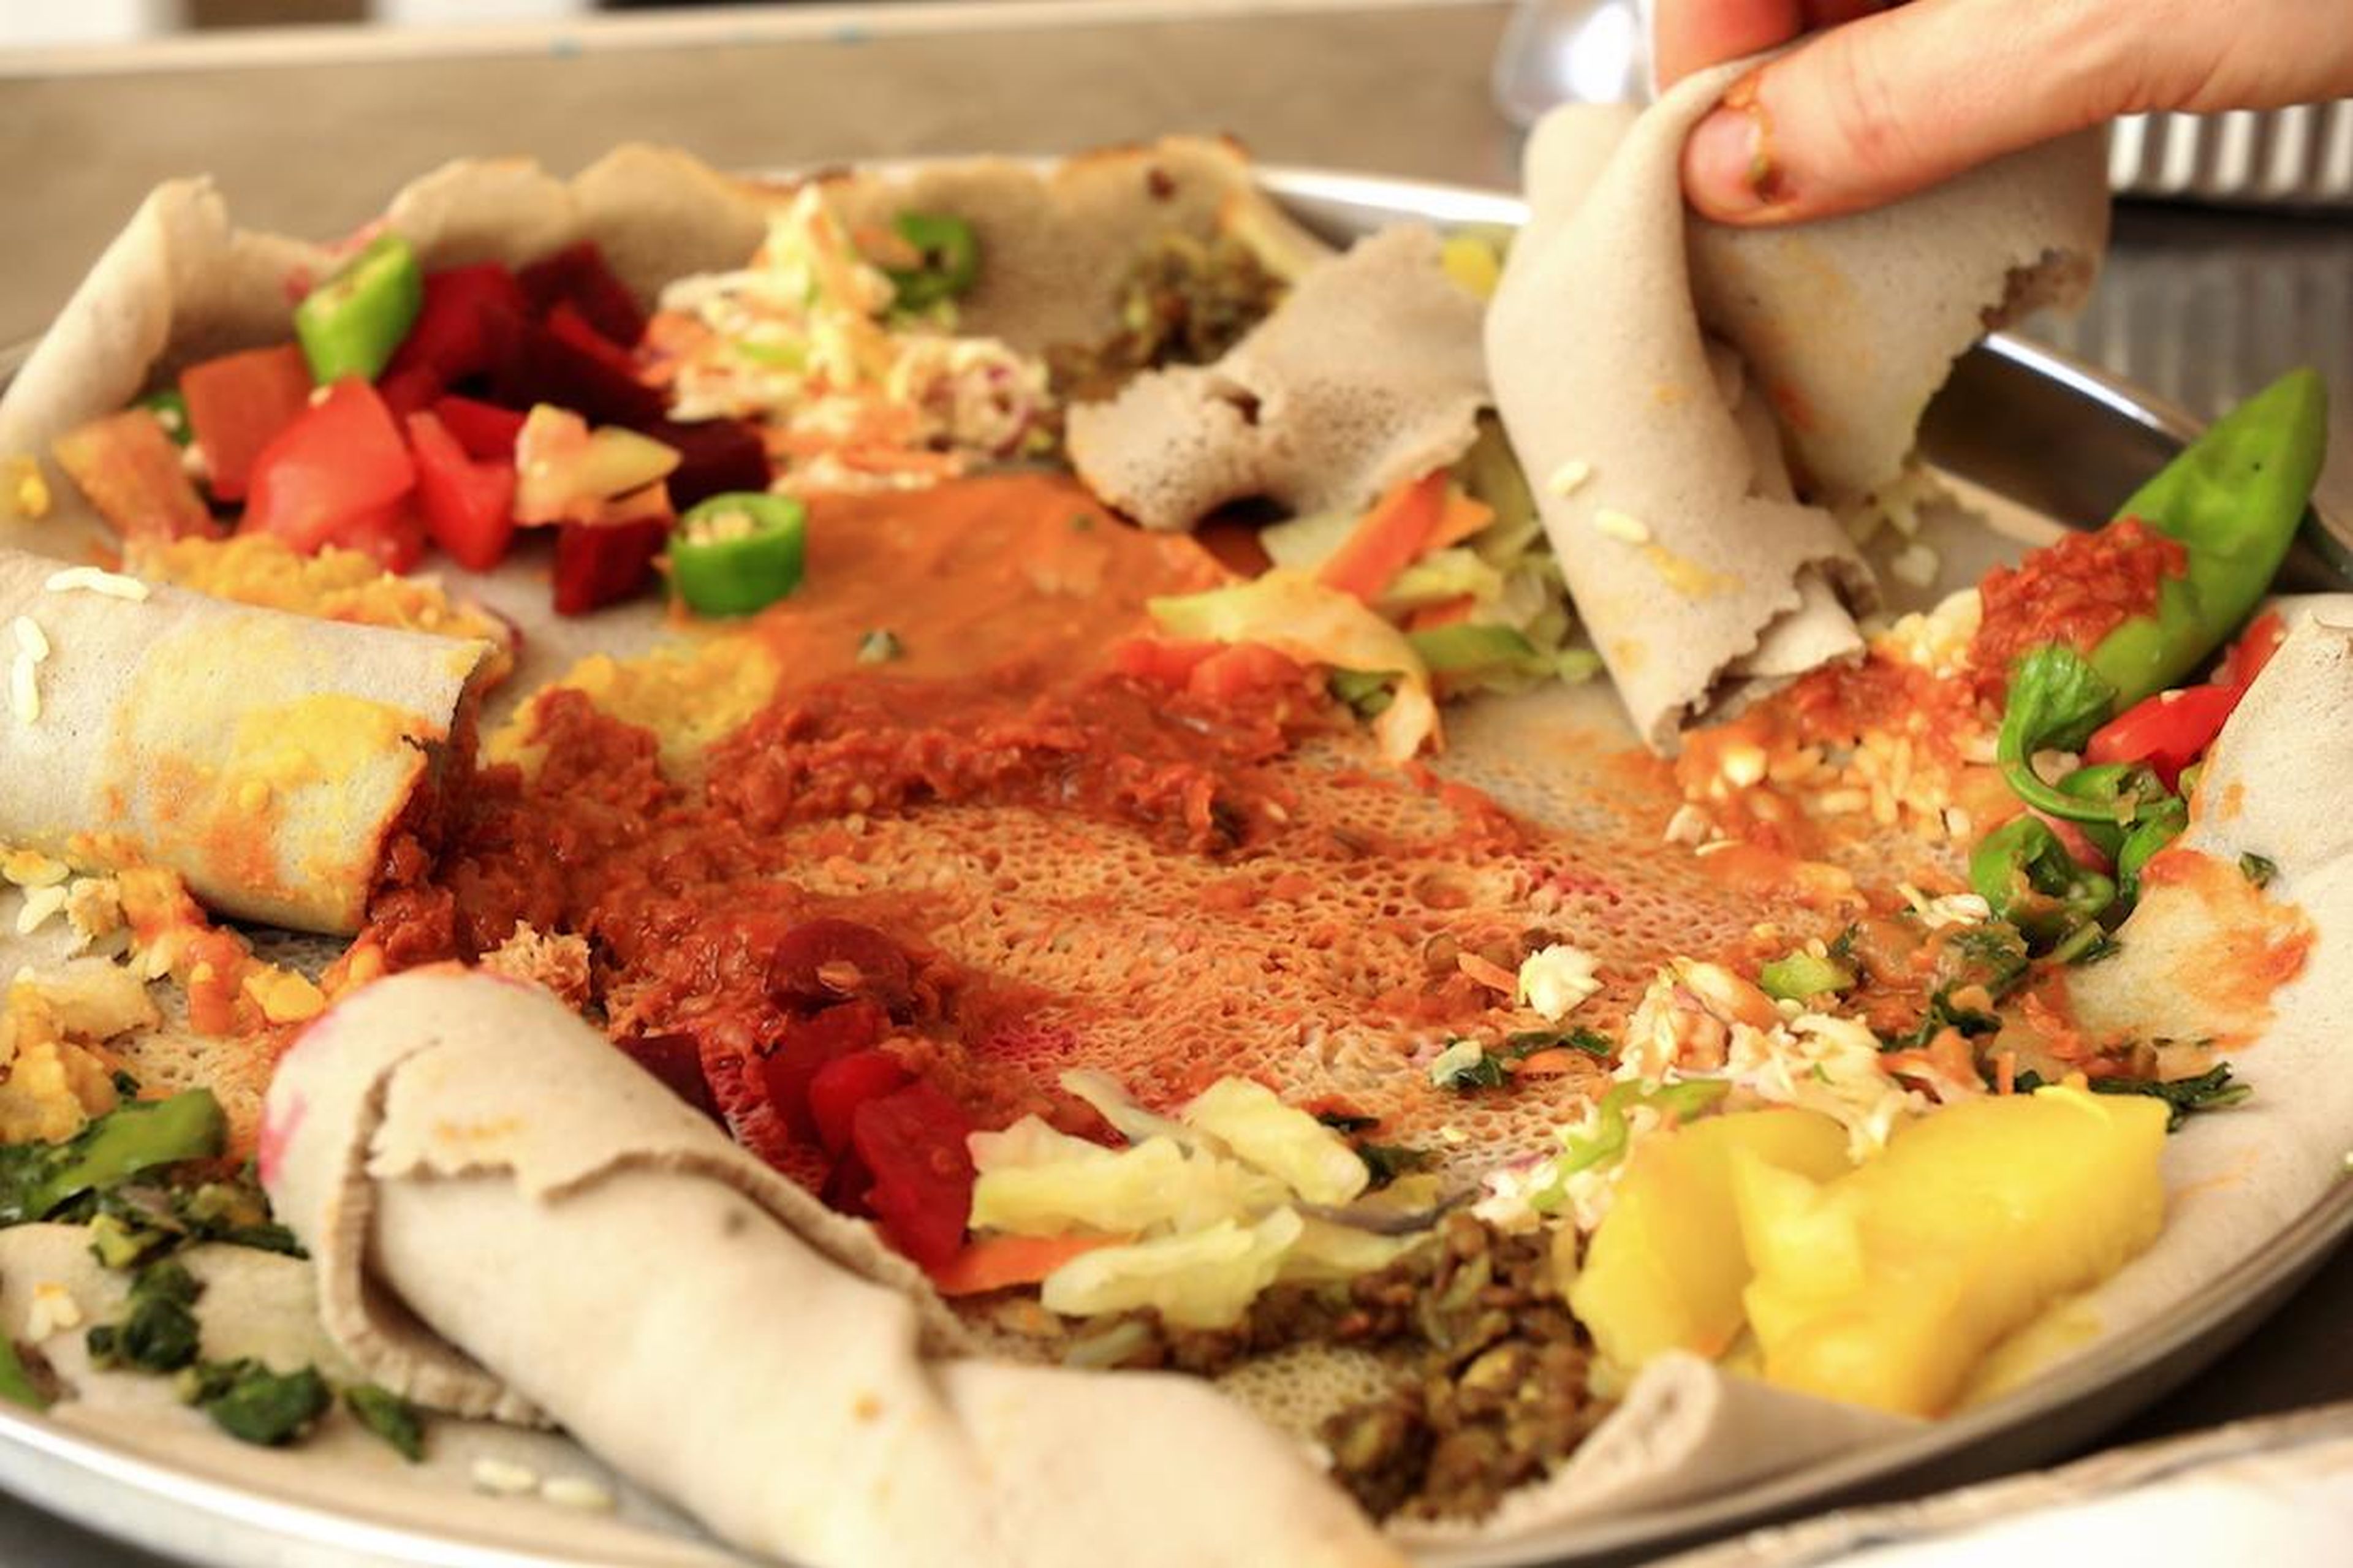 Ethiopians serve their meals atop a tart, fiber-rich bread called injera.